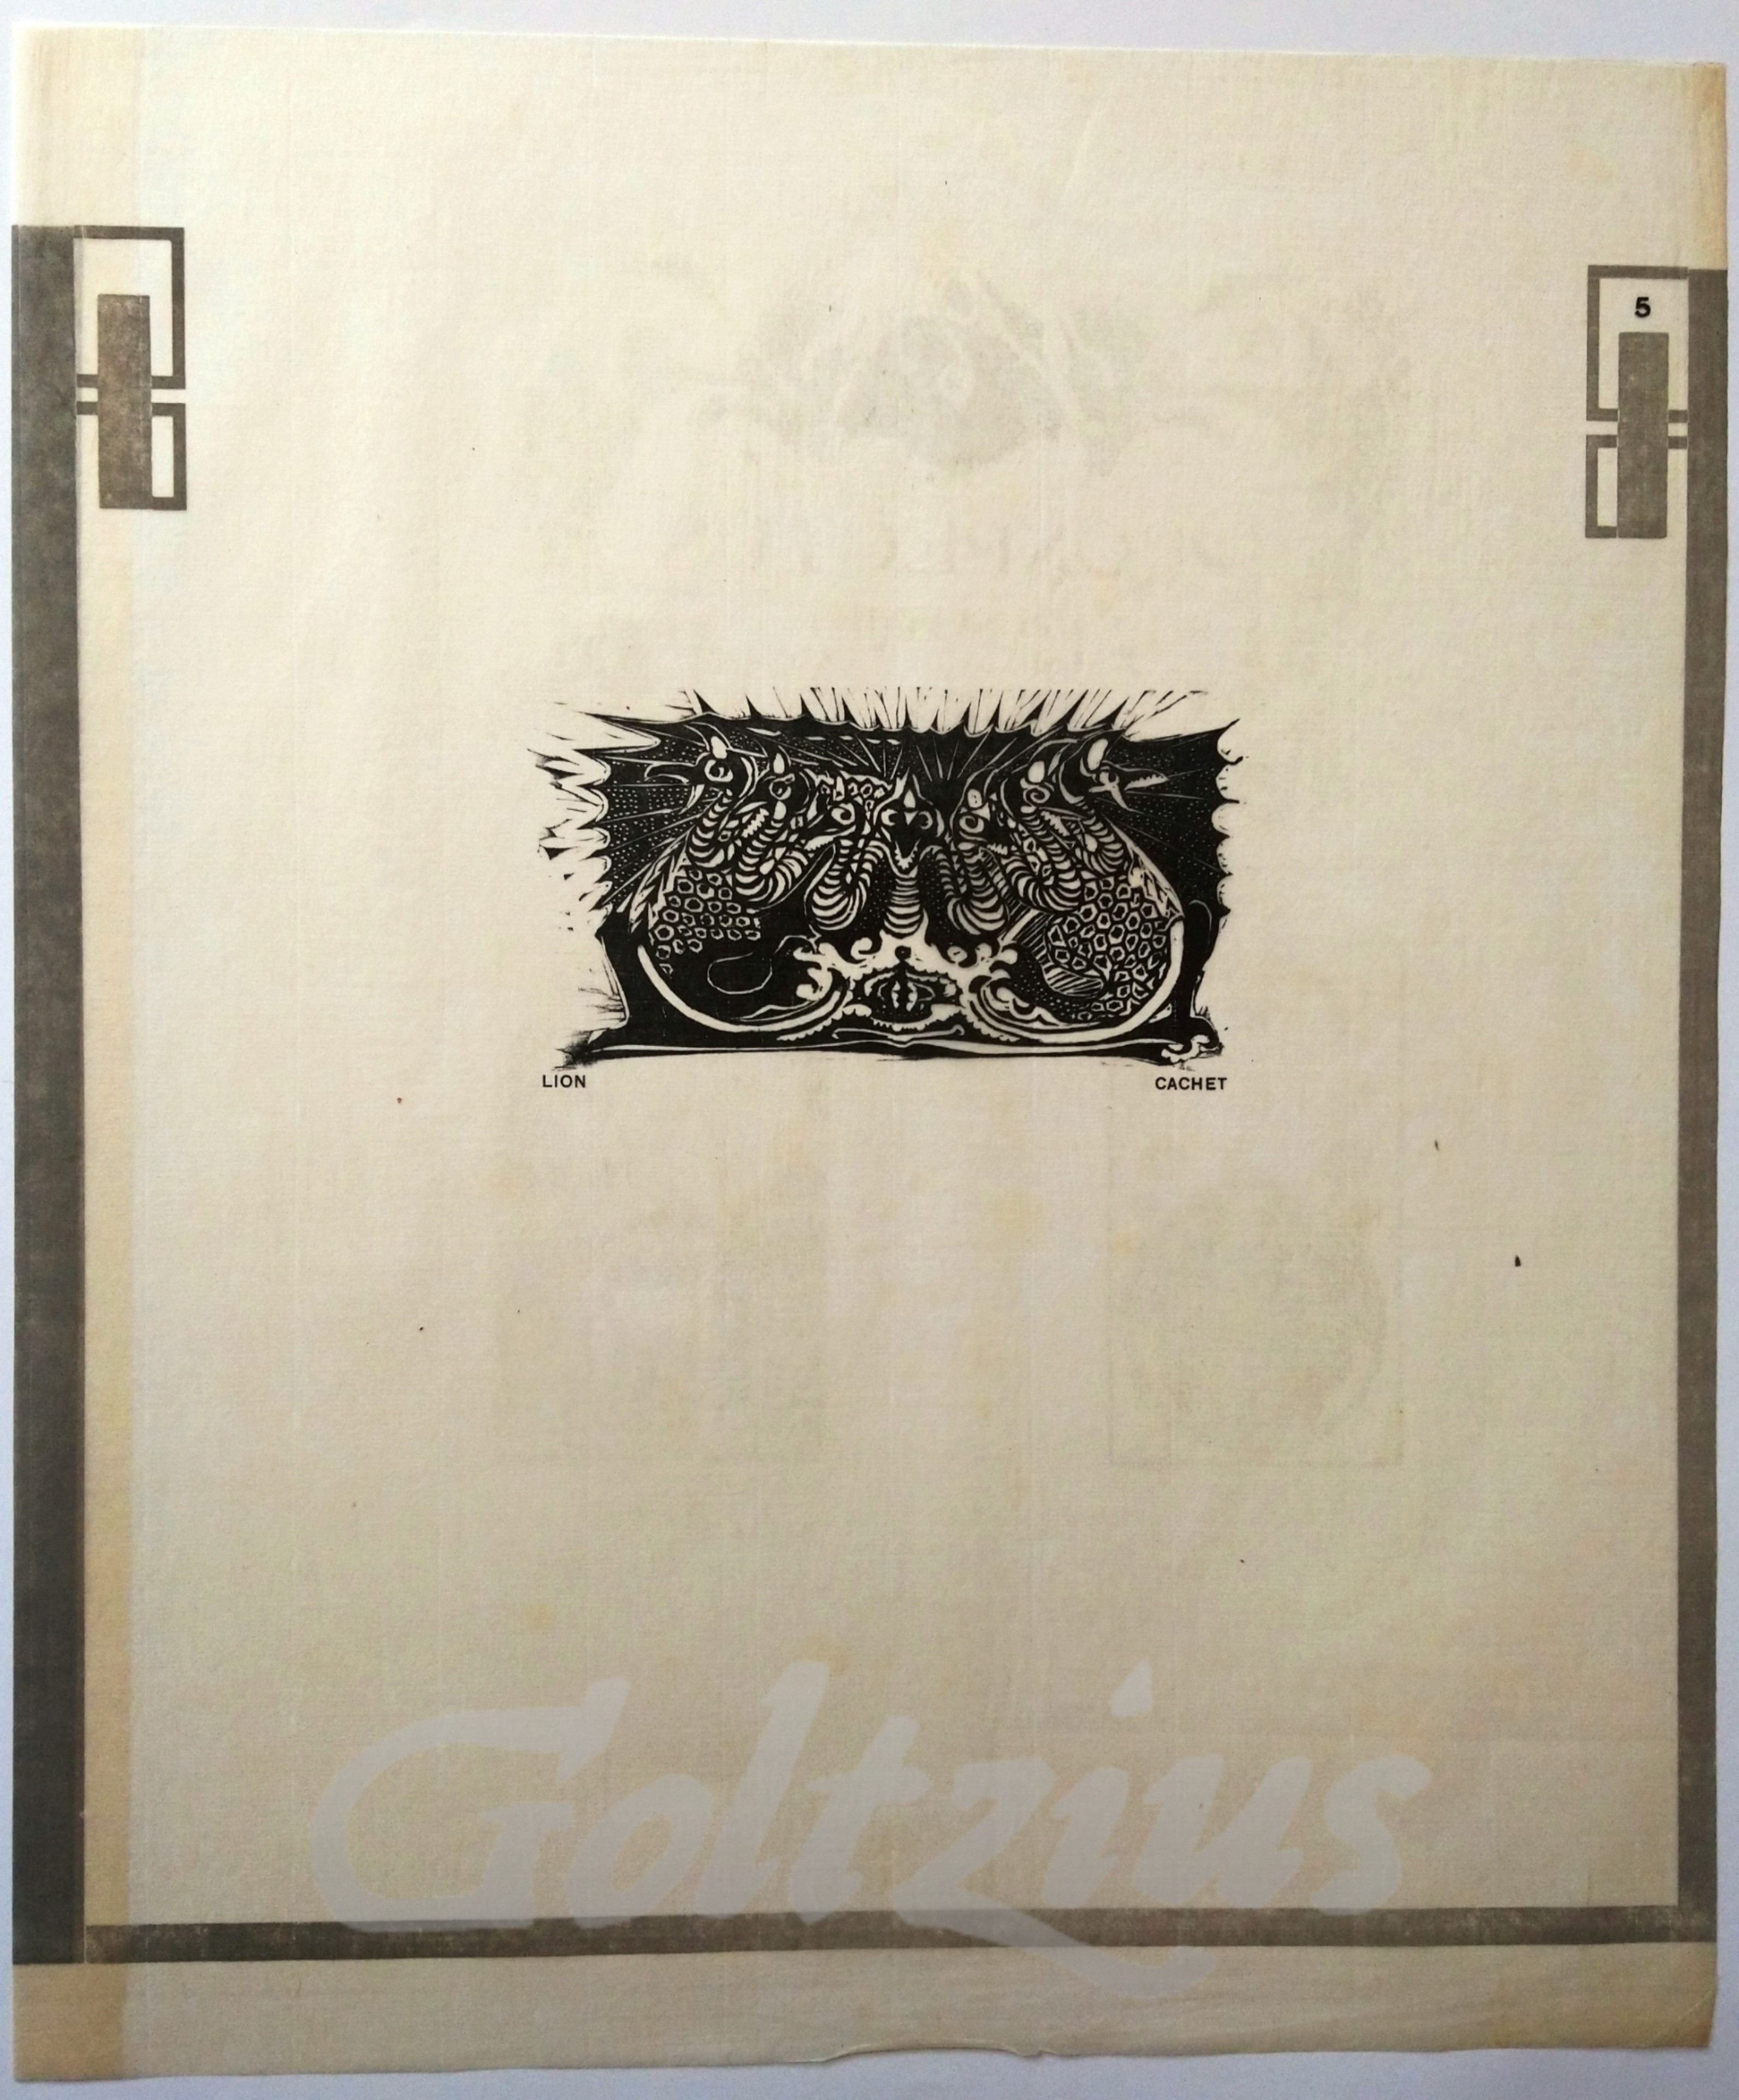 LION CACHET, CAREL ADOLPH, Dragon design